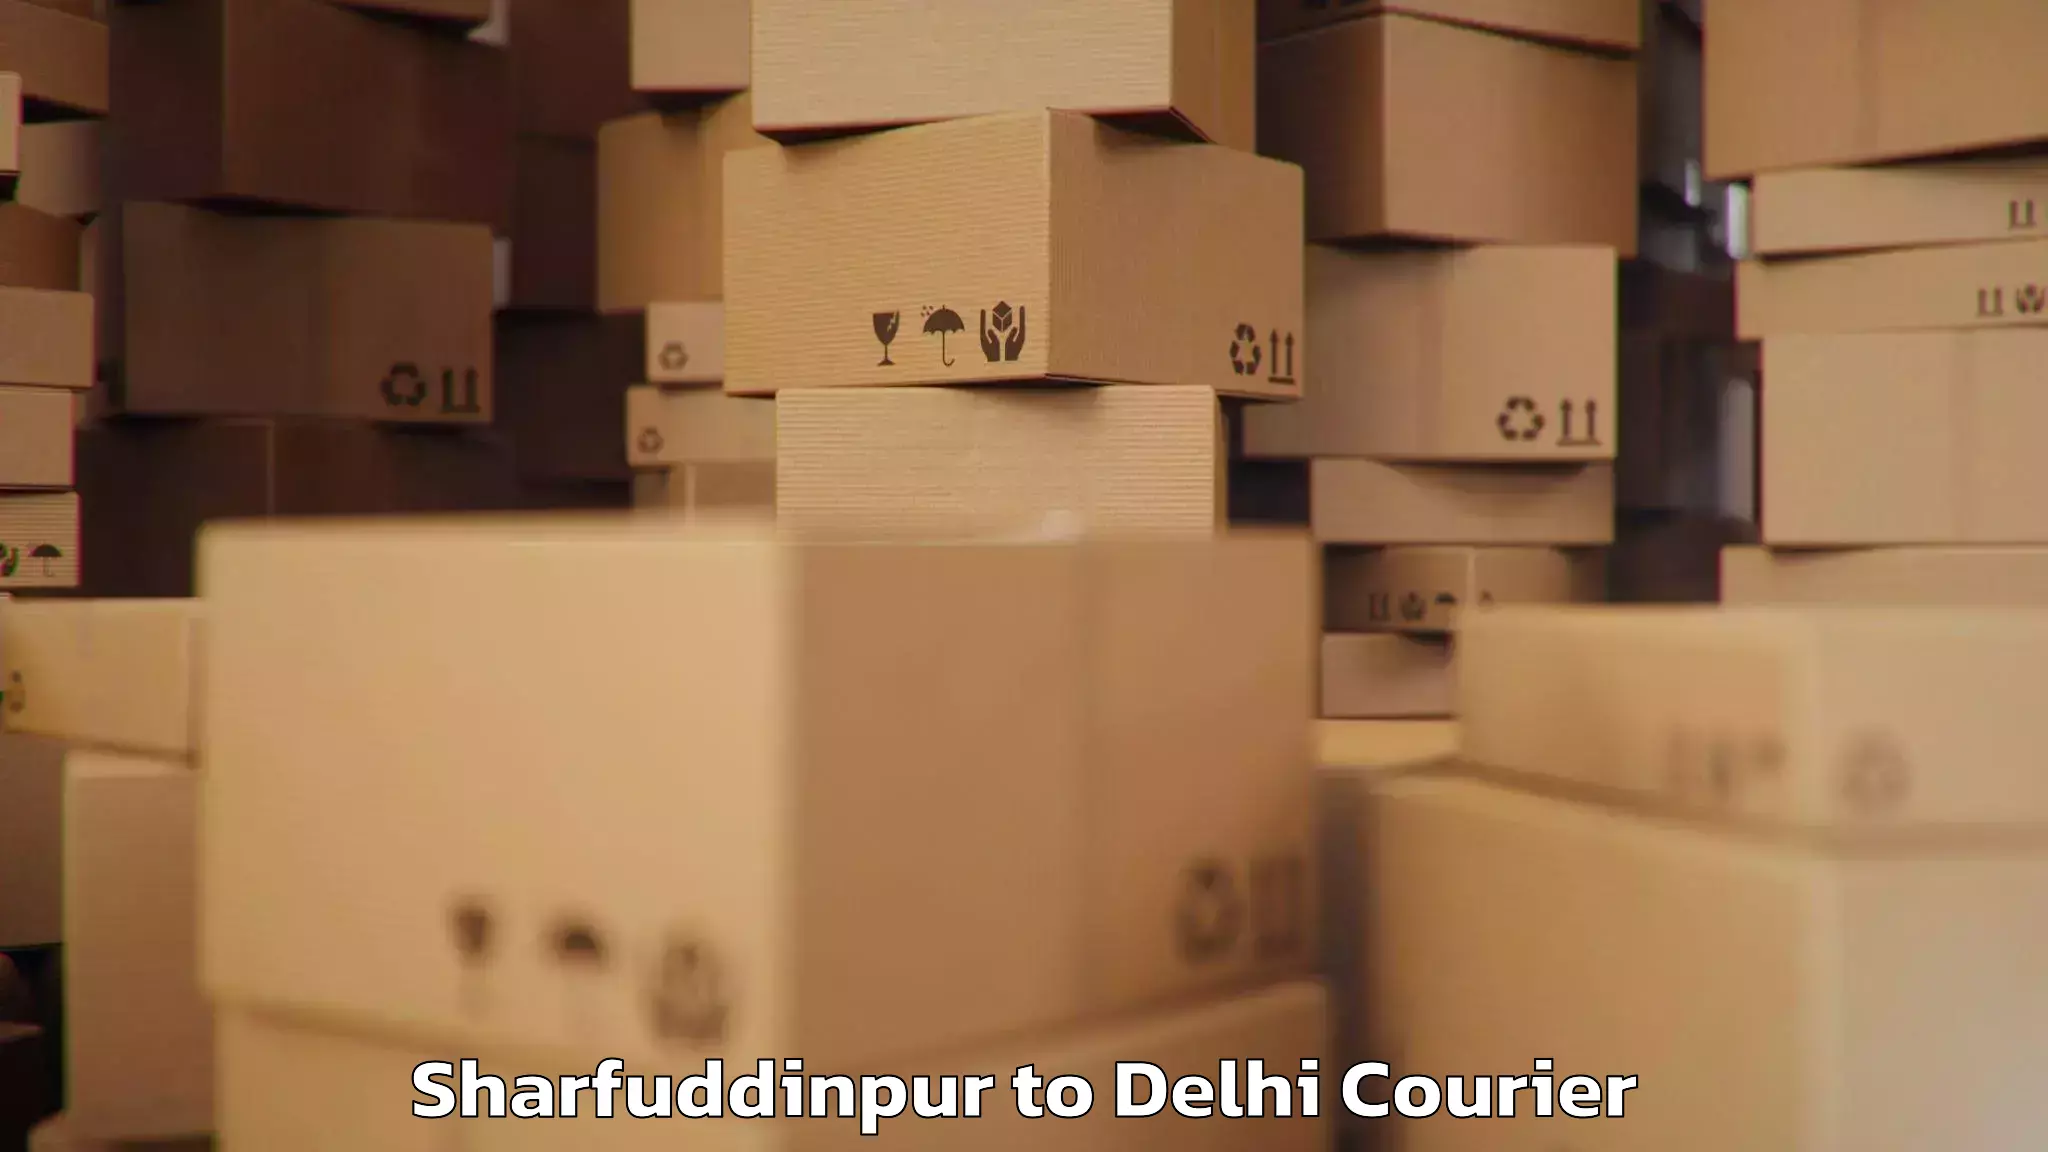 Same day luggage service Sharfuddinpur to East Delhi